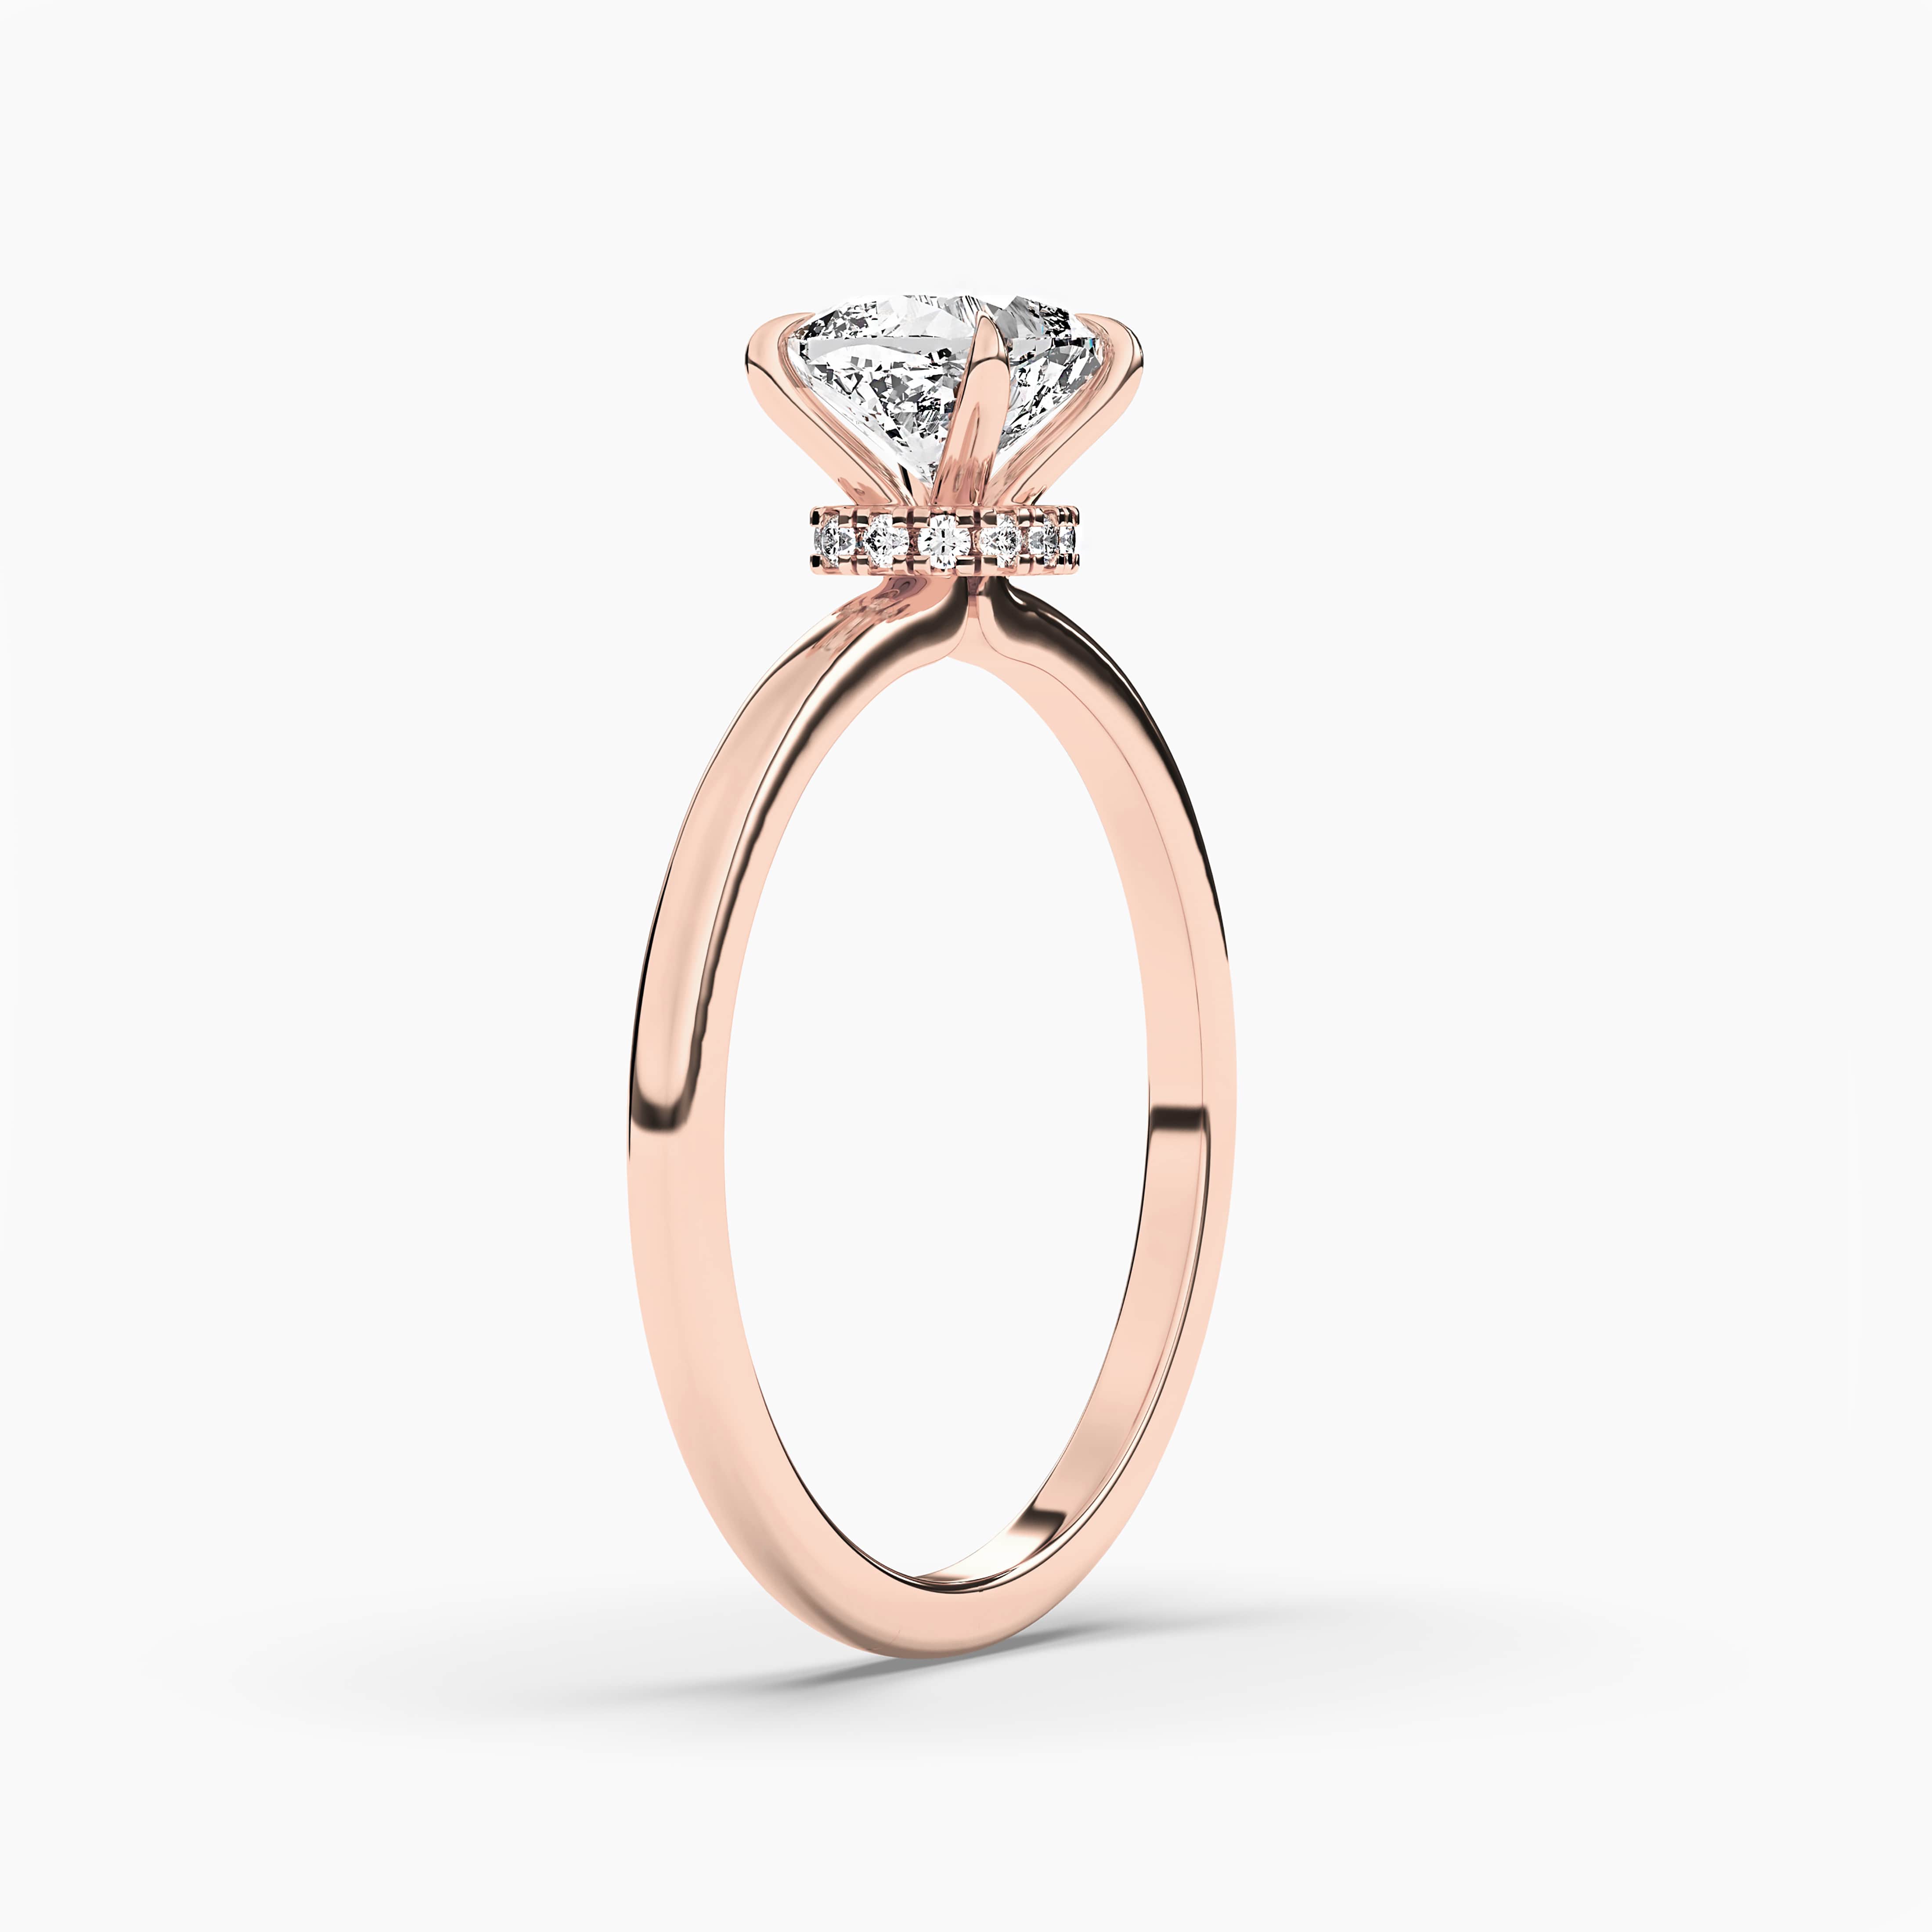 Rose gold hidden halo engagement ring